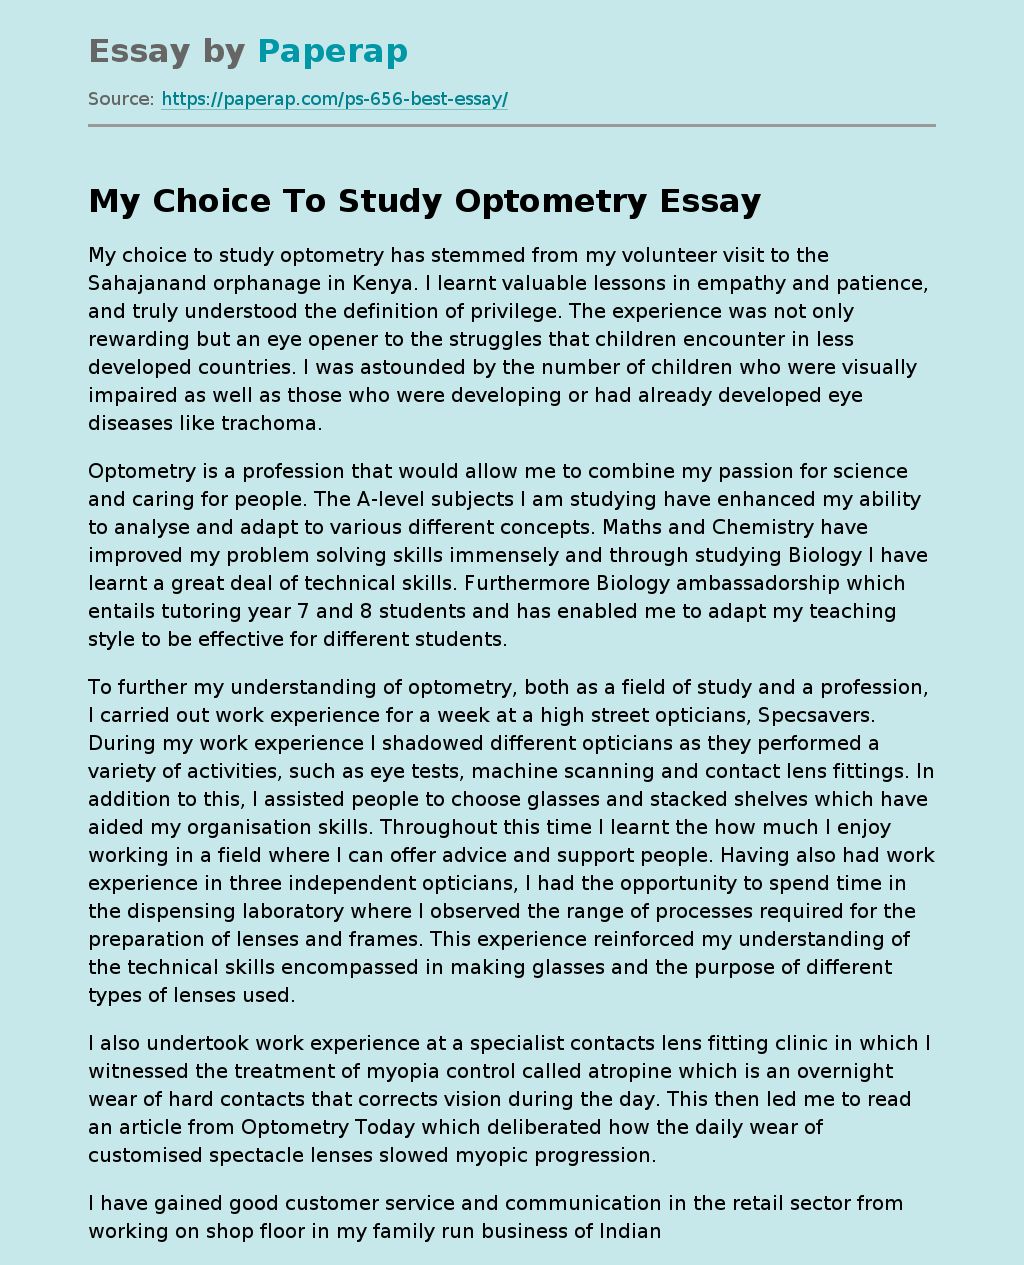 My Choice To Study Optometry